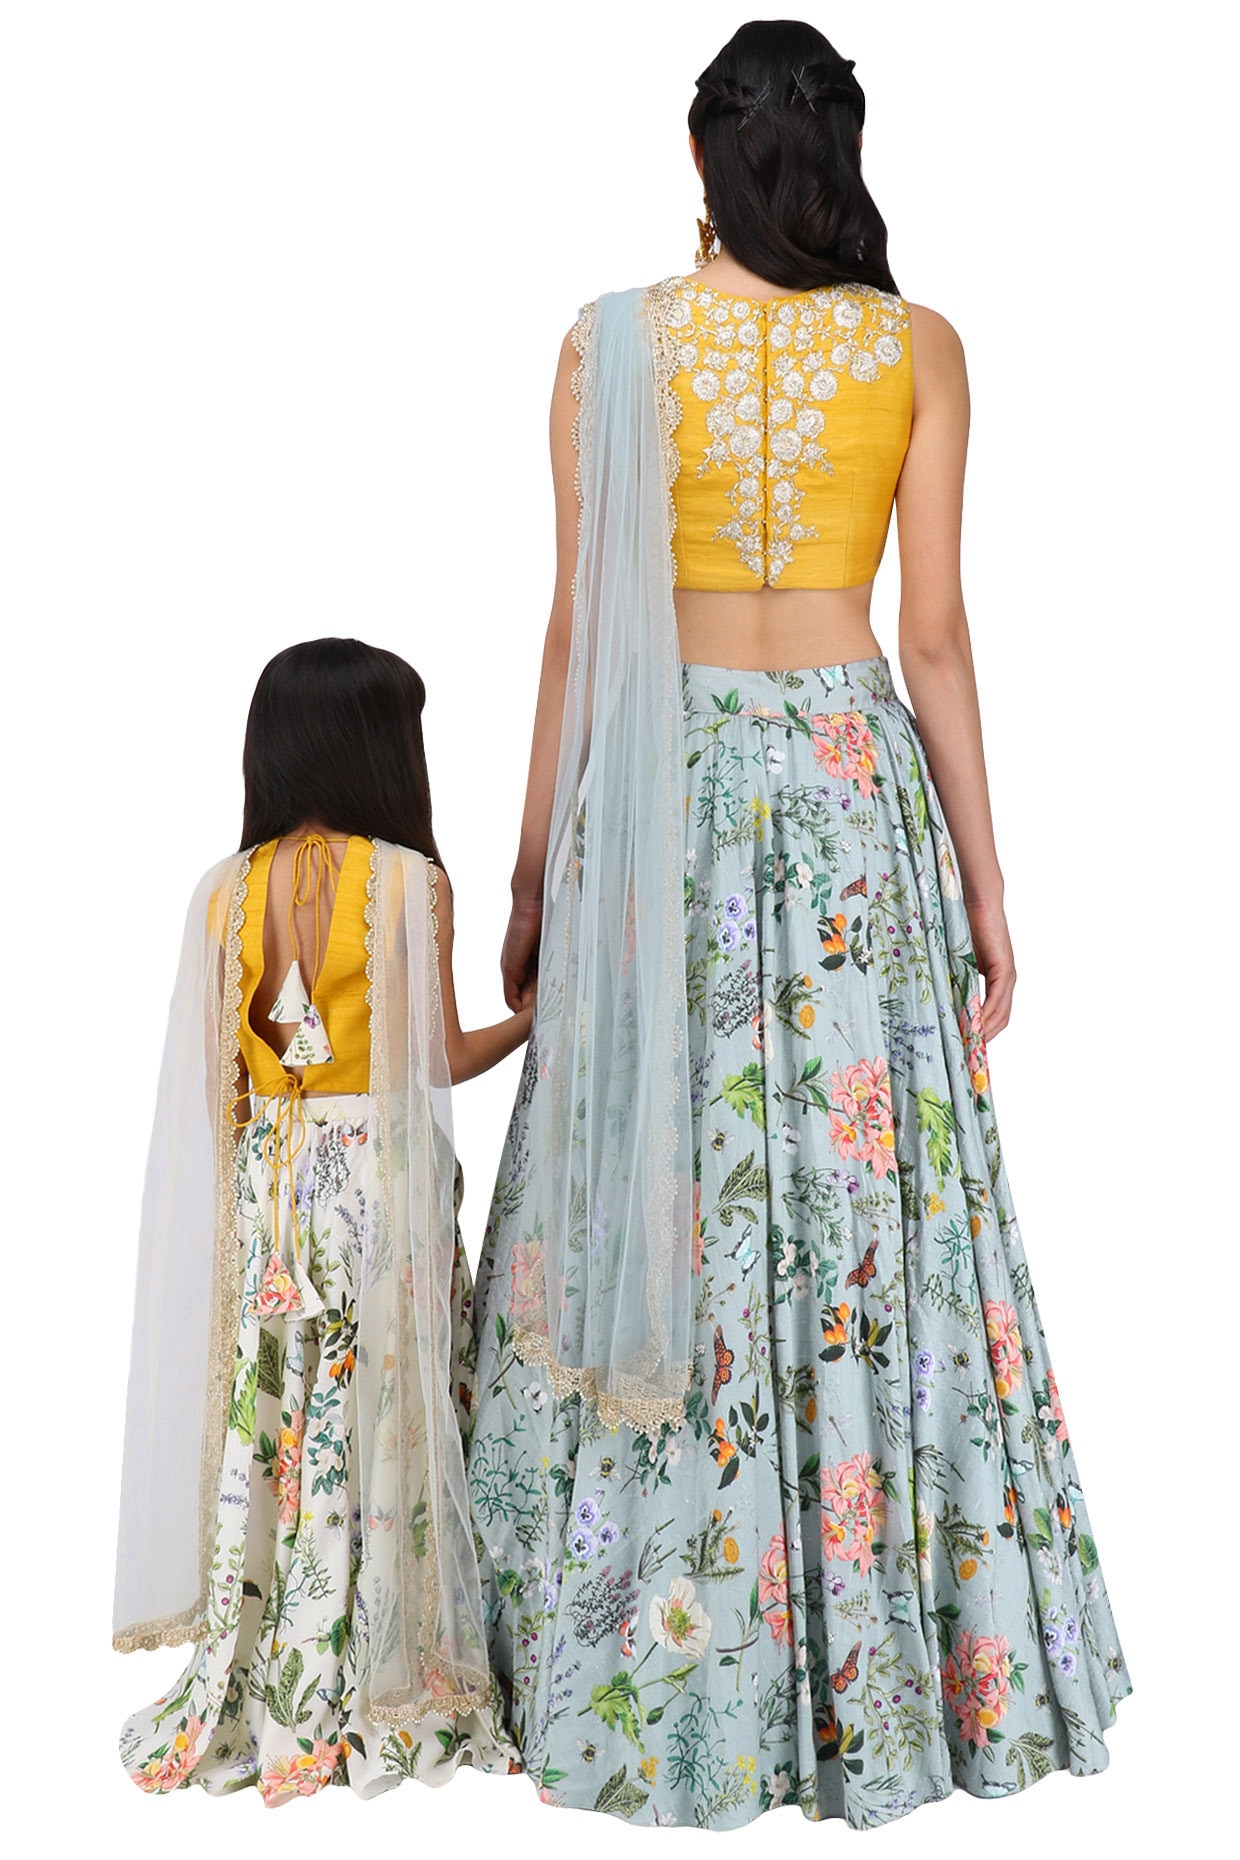 Yellow Blue Koti Lehenga Choli Indian Lengha Chunri Sari Ghagra Choli Dress  Top | eBay